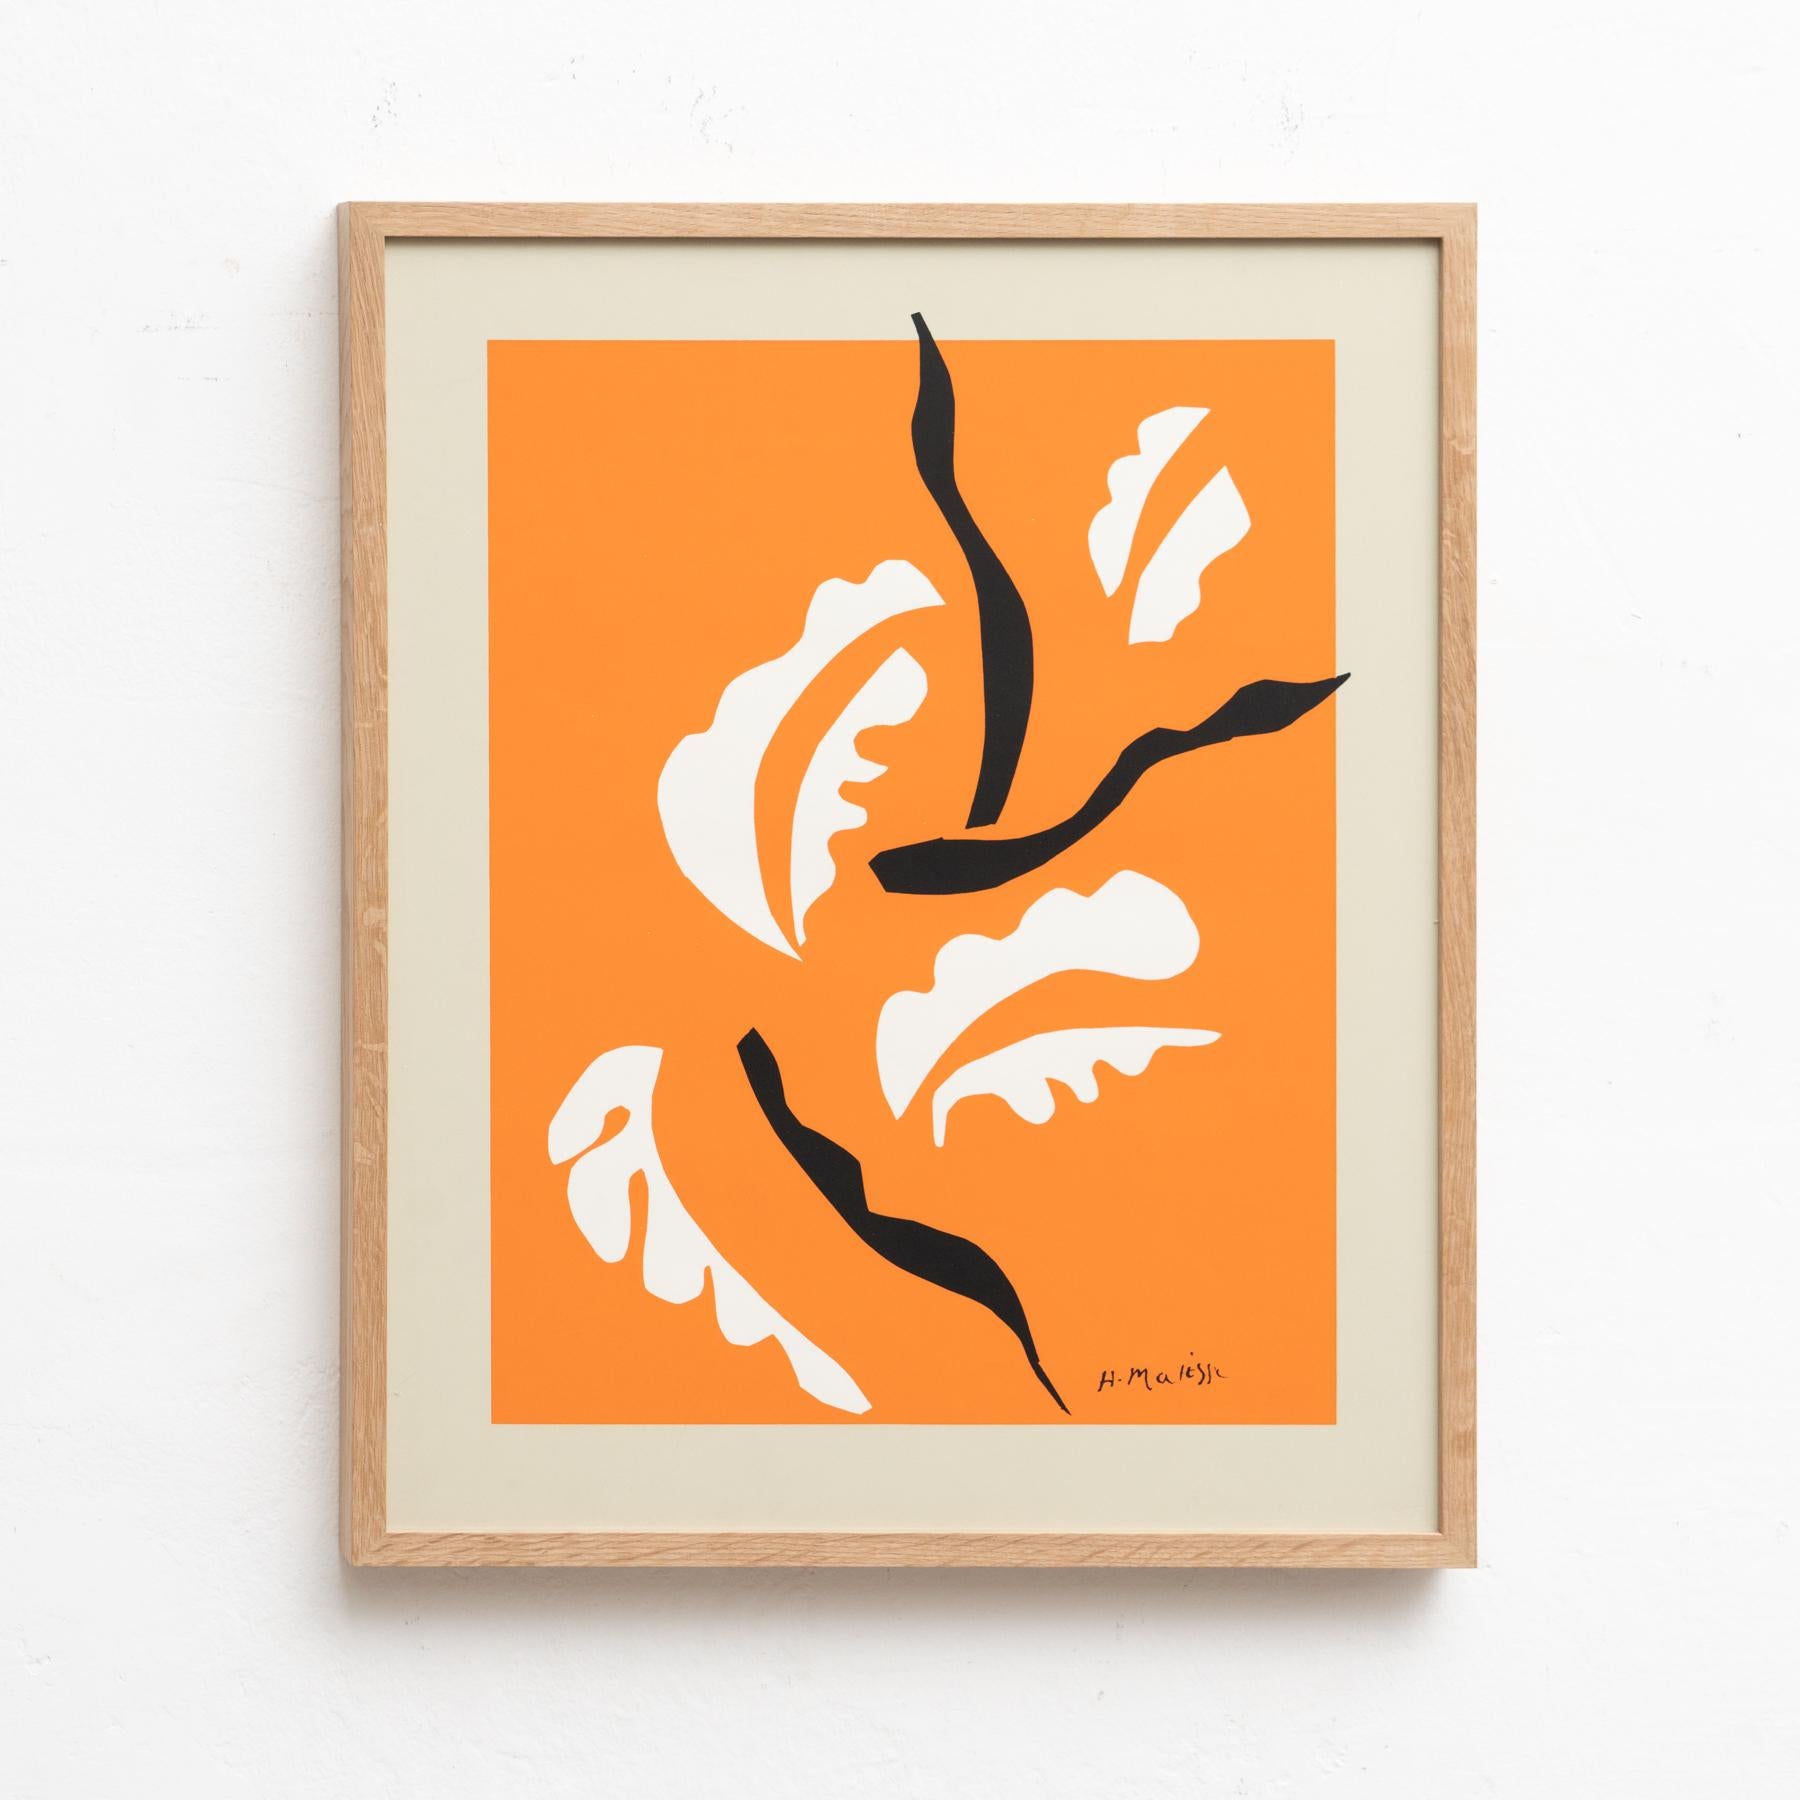 Paper Henri Matisse Color Lithography, circa 1970